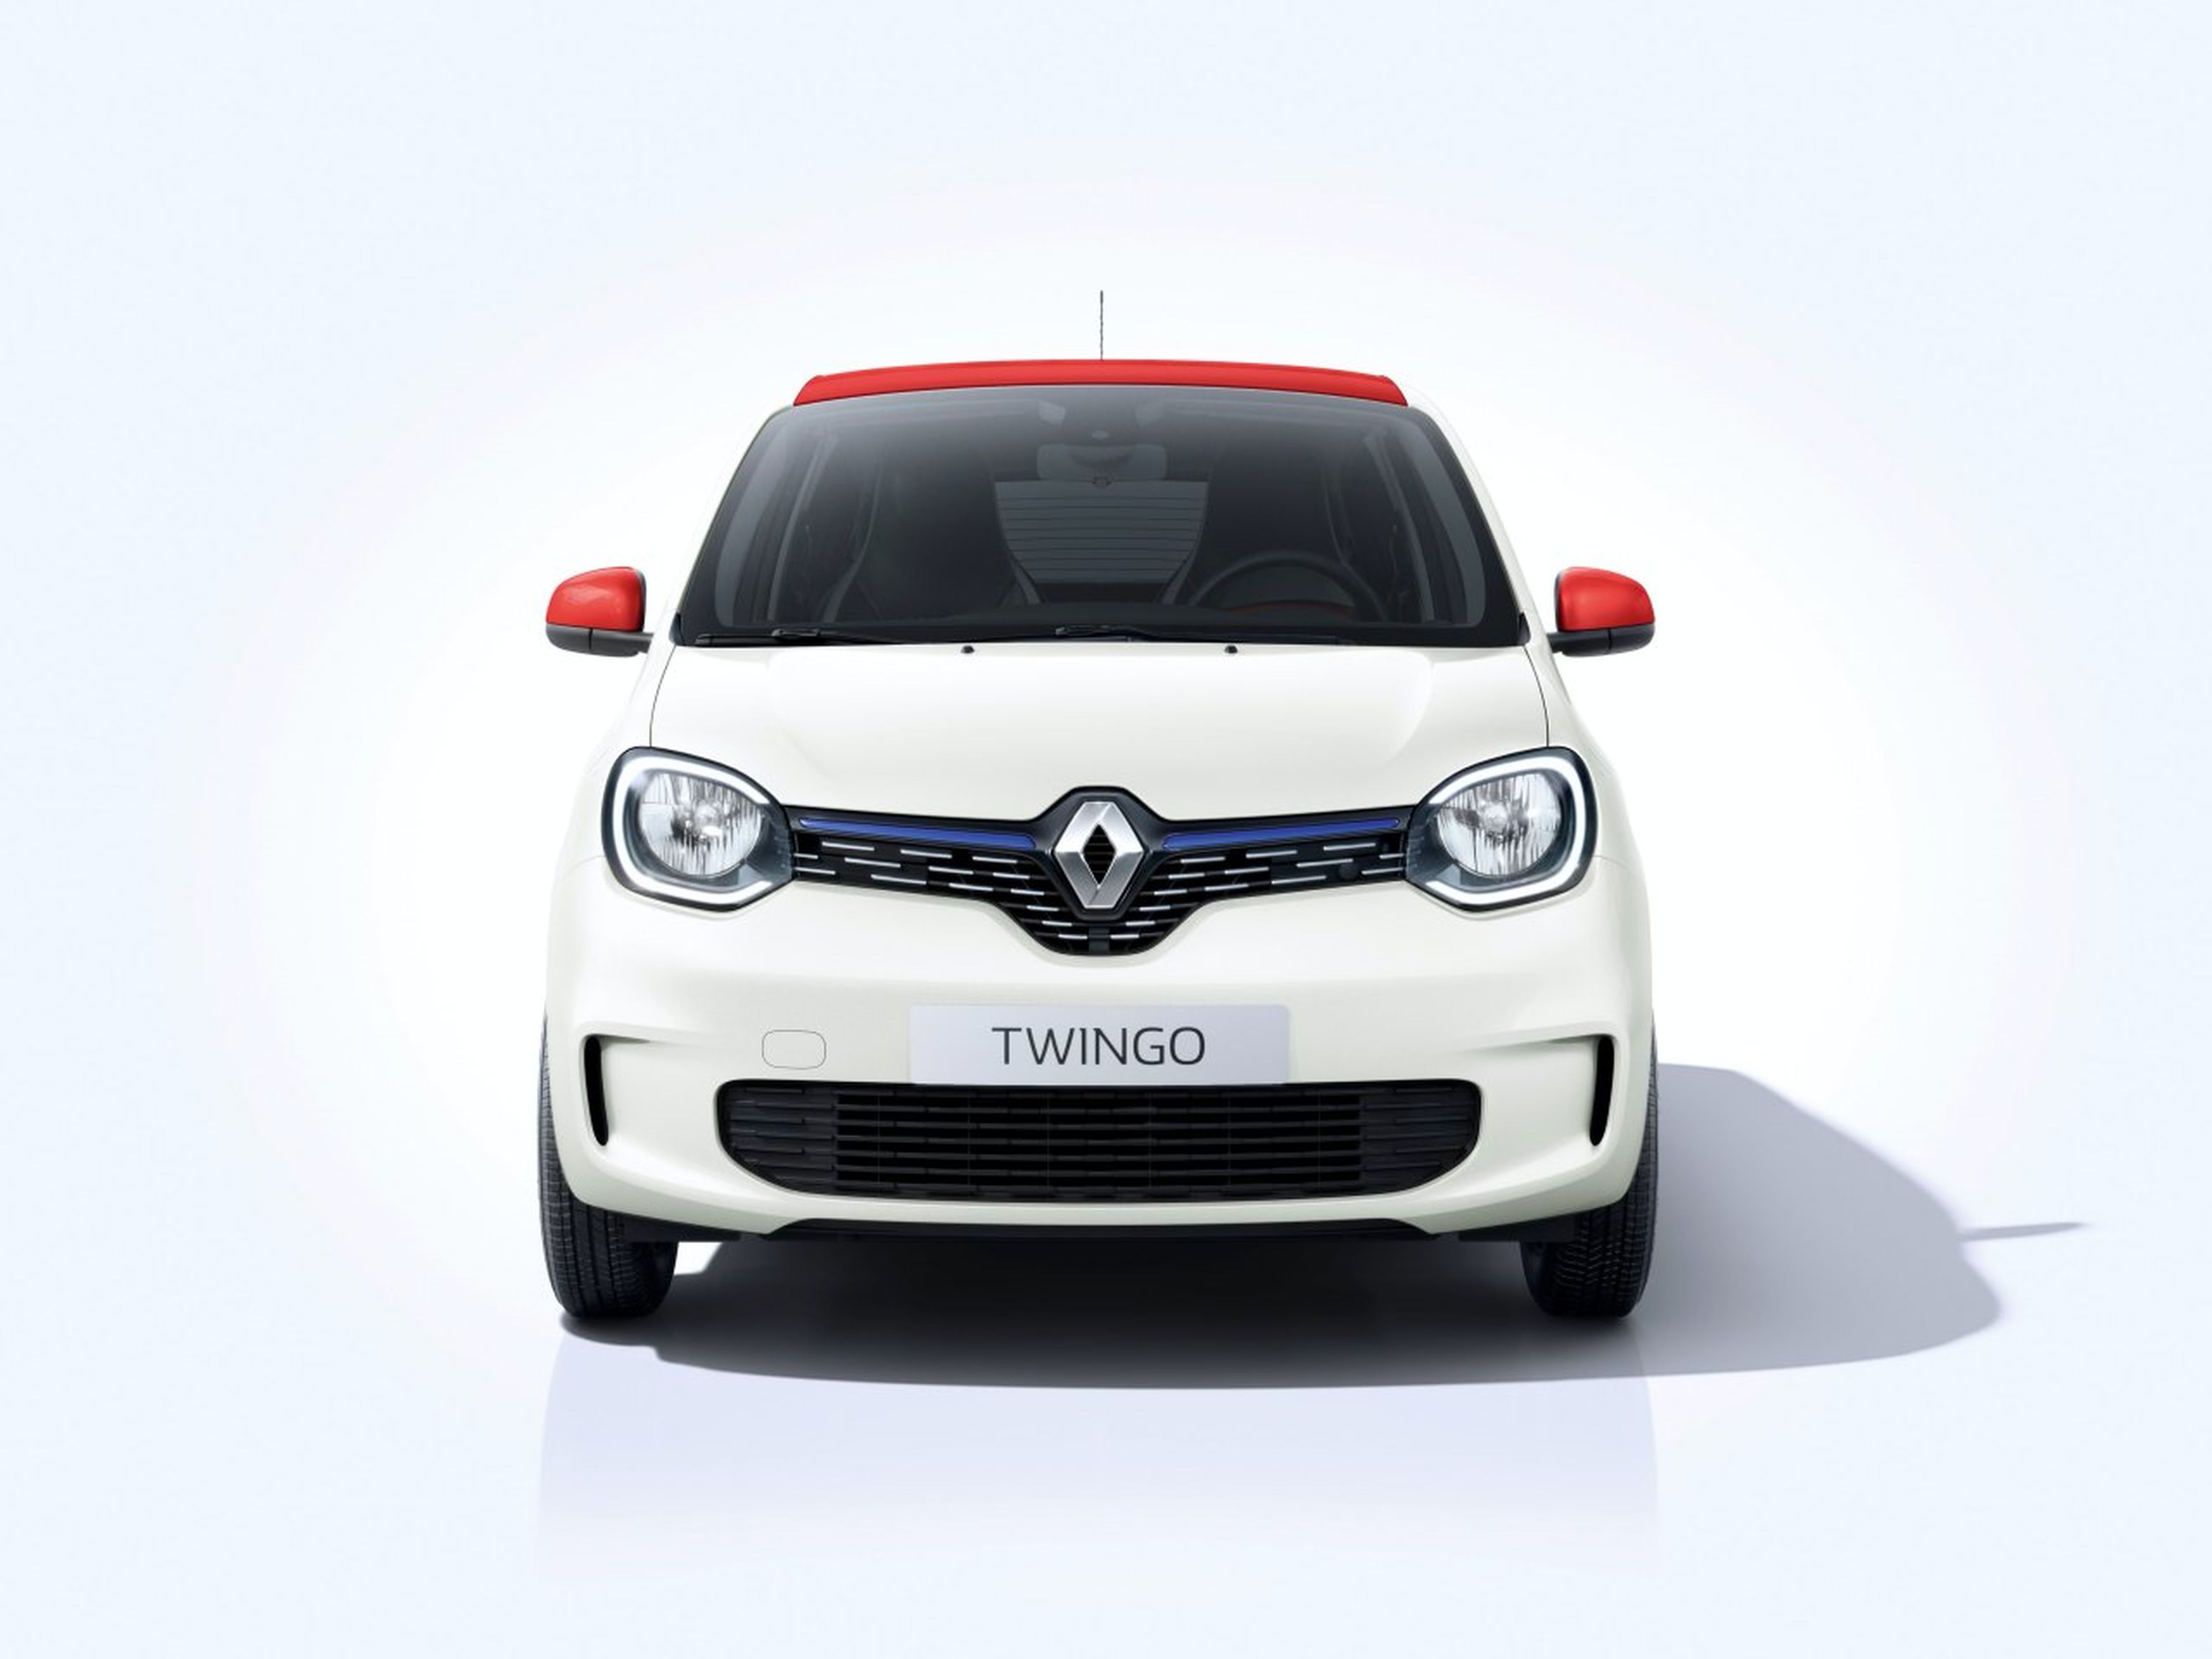 Renault Twingo Le Coq Sportif